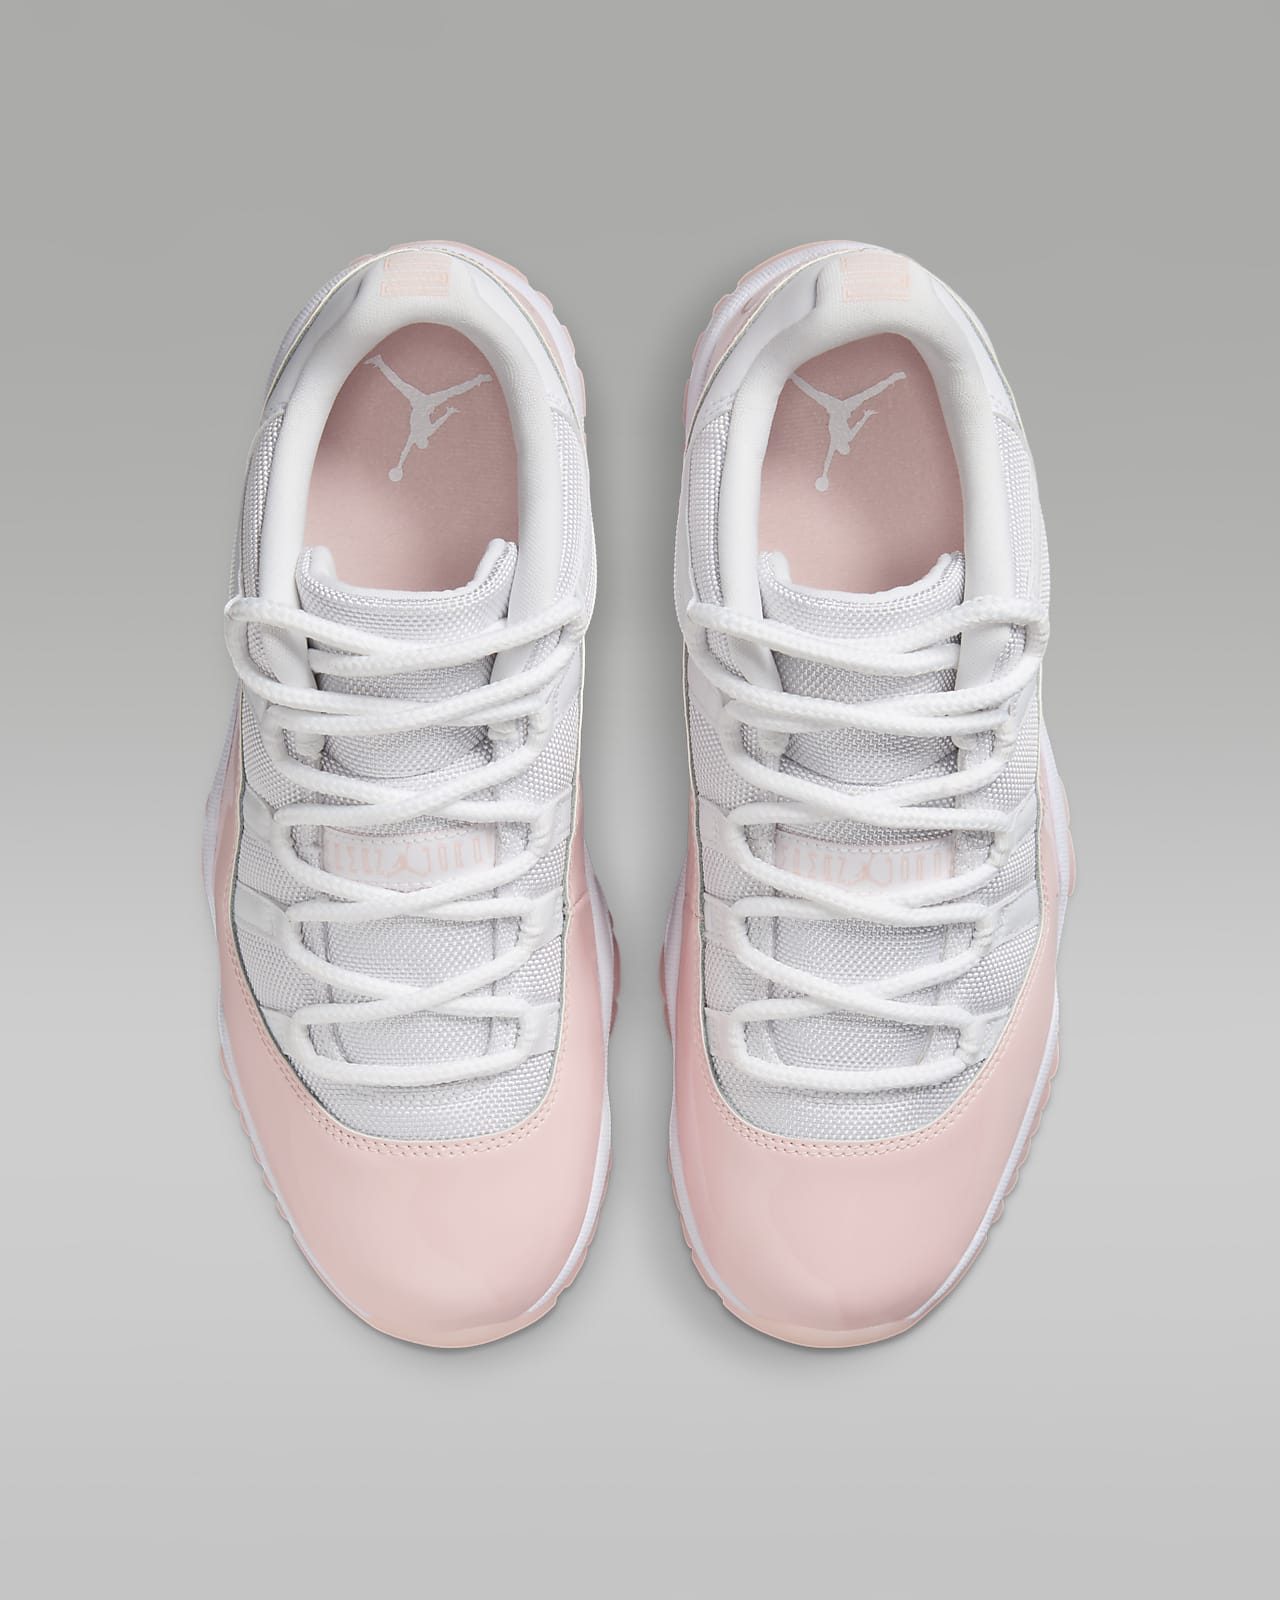 Air Jordan 11 Retro Low Women's Shoes. Nike LU